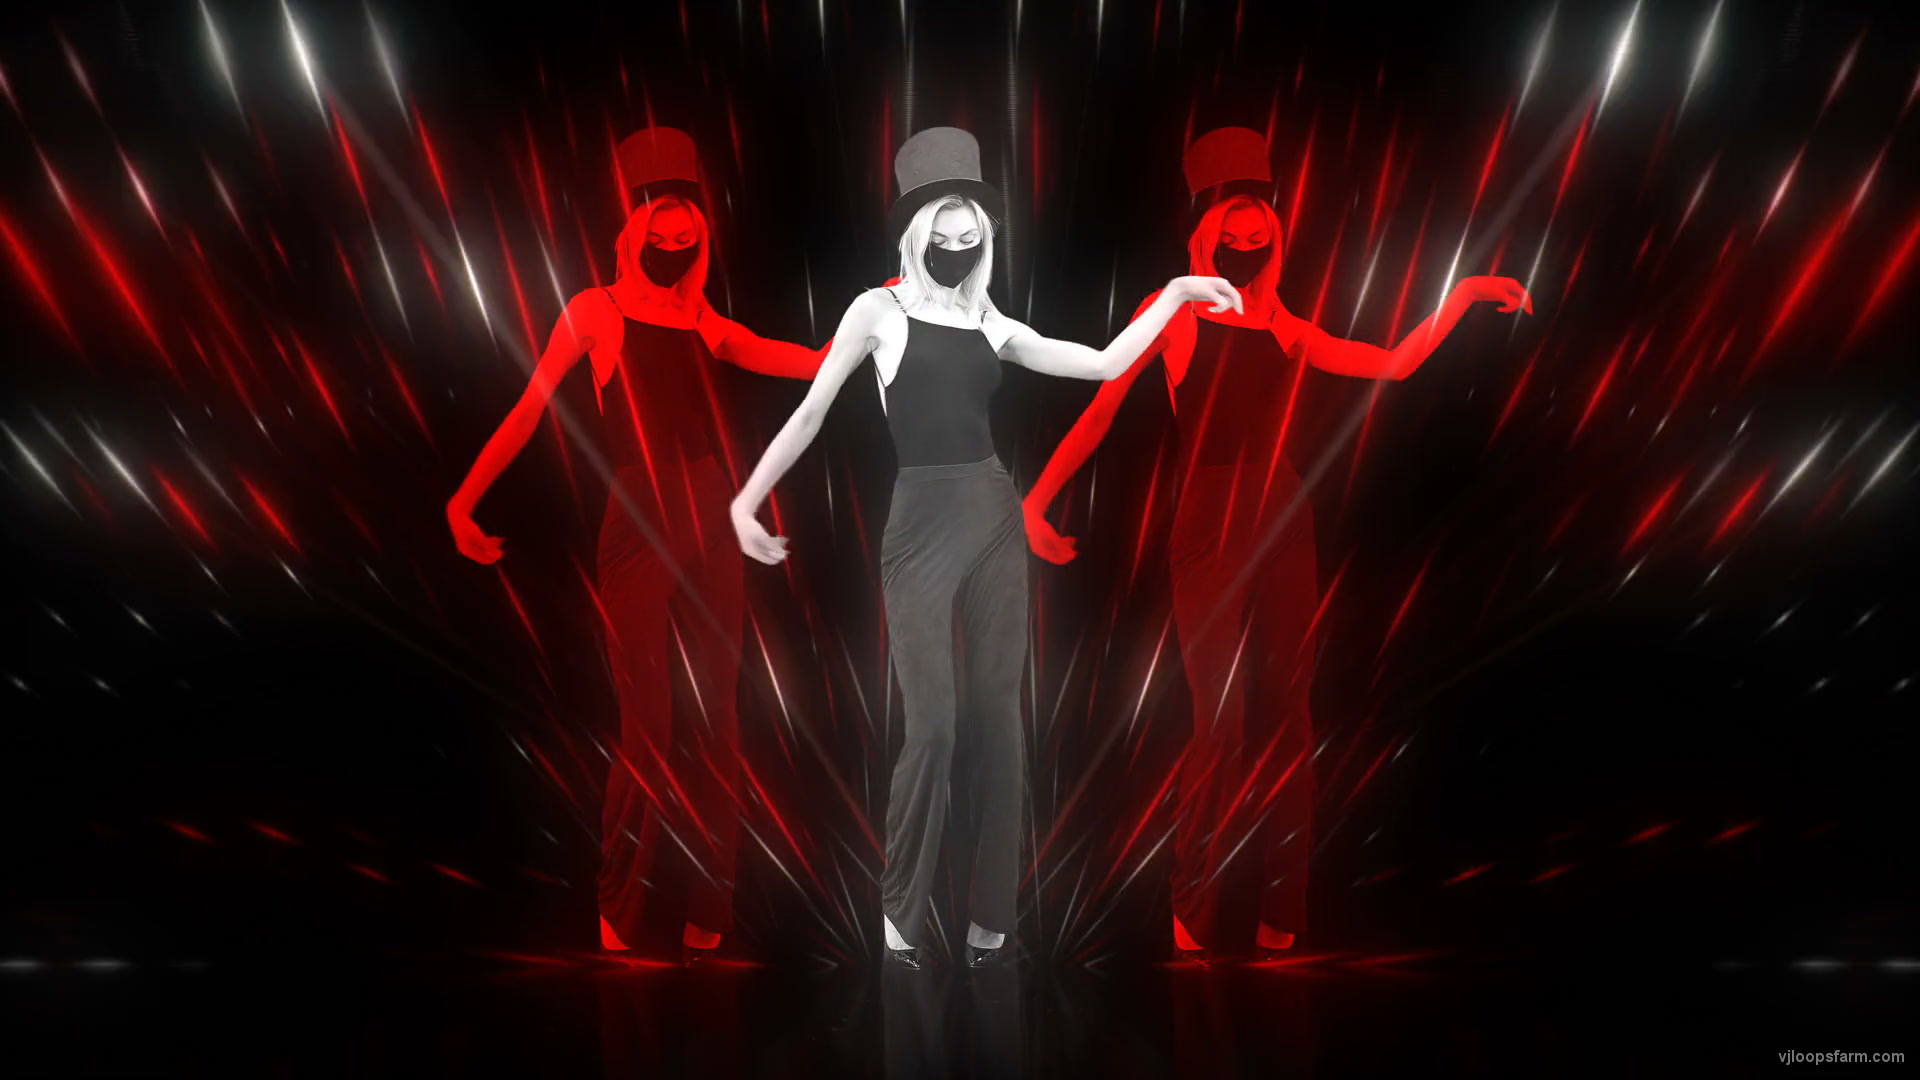 Beauty Blonde Girl in Covid-19 black mask dancing on Line Motion Background 4K Video Vj Footage